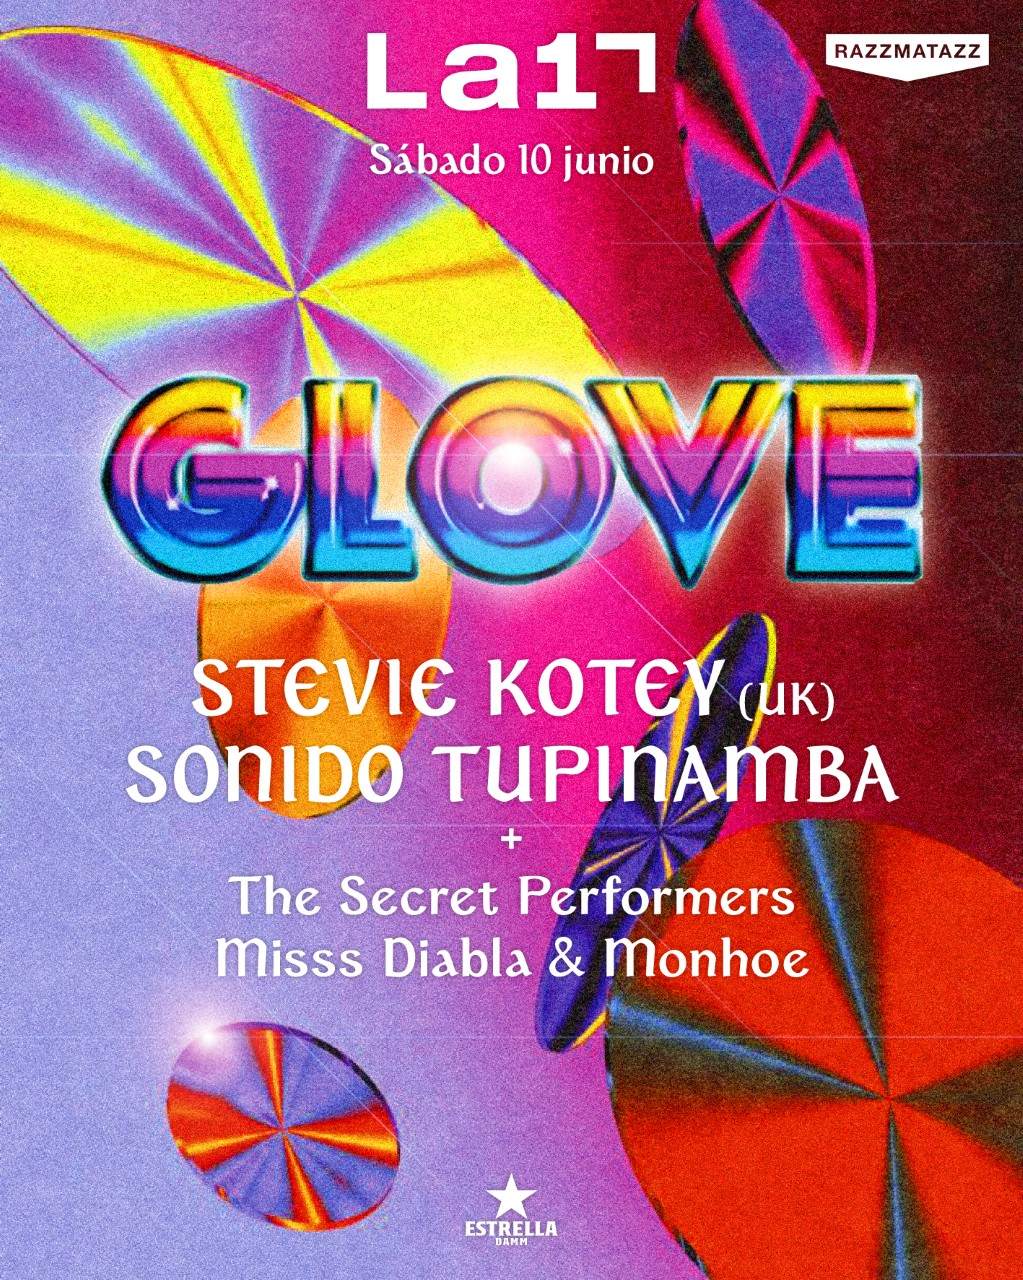 LA1 presenta: GLOVE: Stevie Kotey (UK) + Sonido Tupinamba - フライヤー表